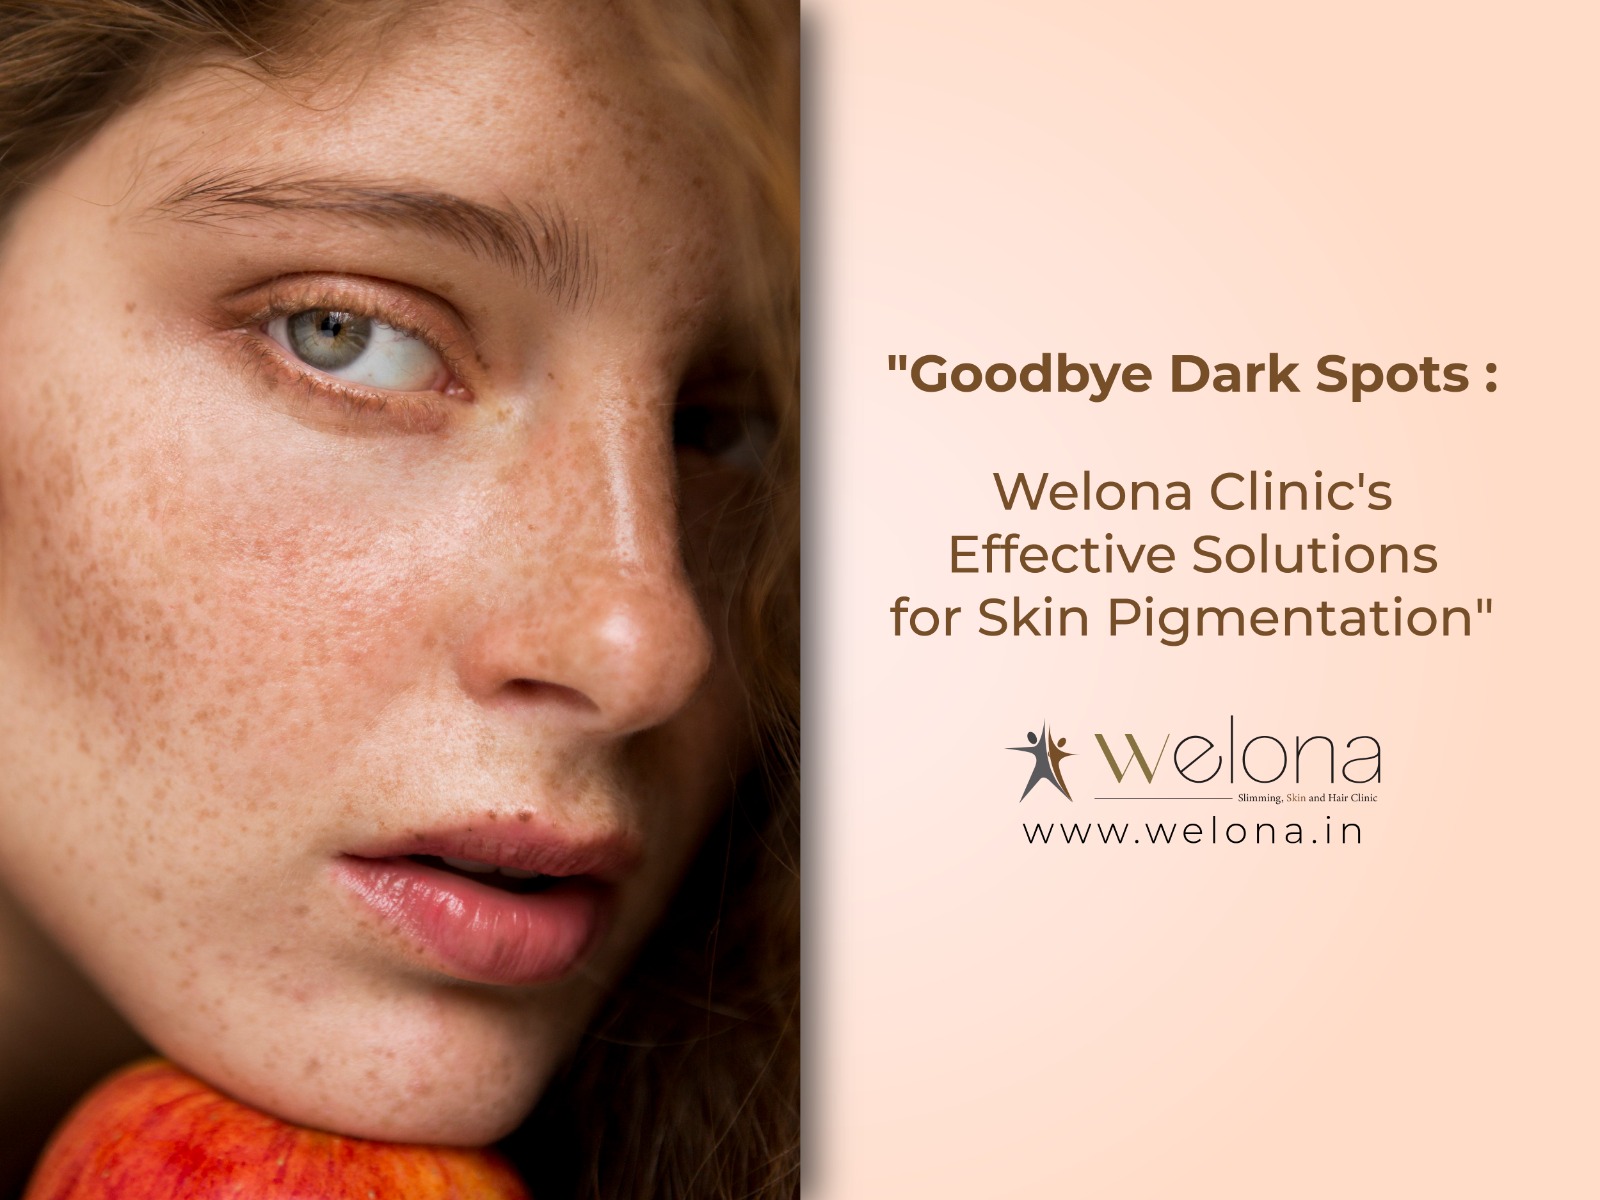 Dark Spots: Welona Clinic’s Effective Solutions for Skin Pigmentation